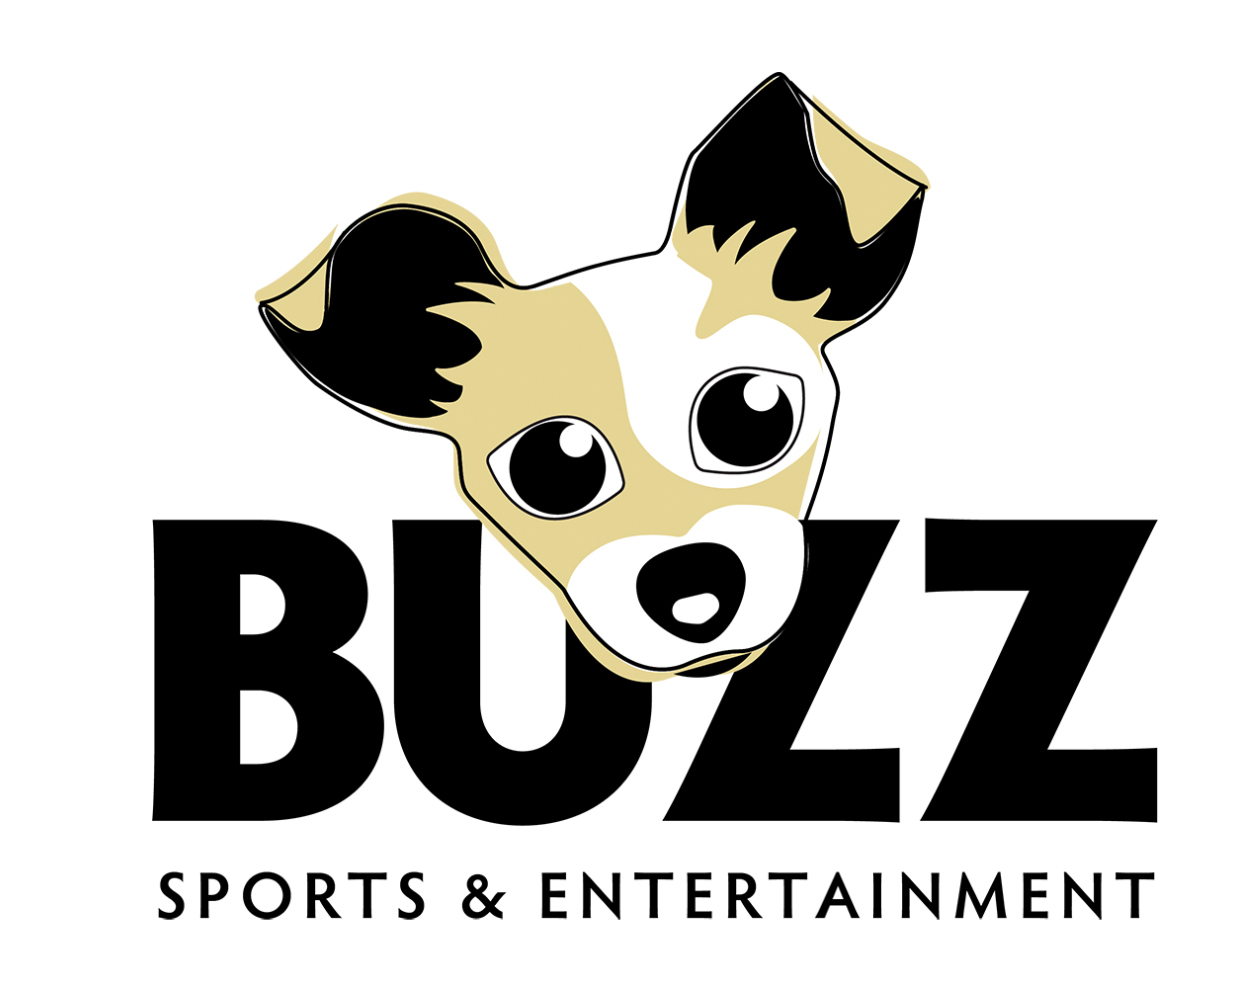 Buzz Sports Entertainment logo